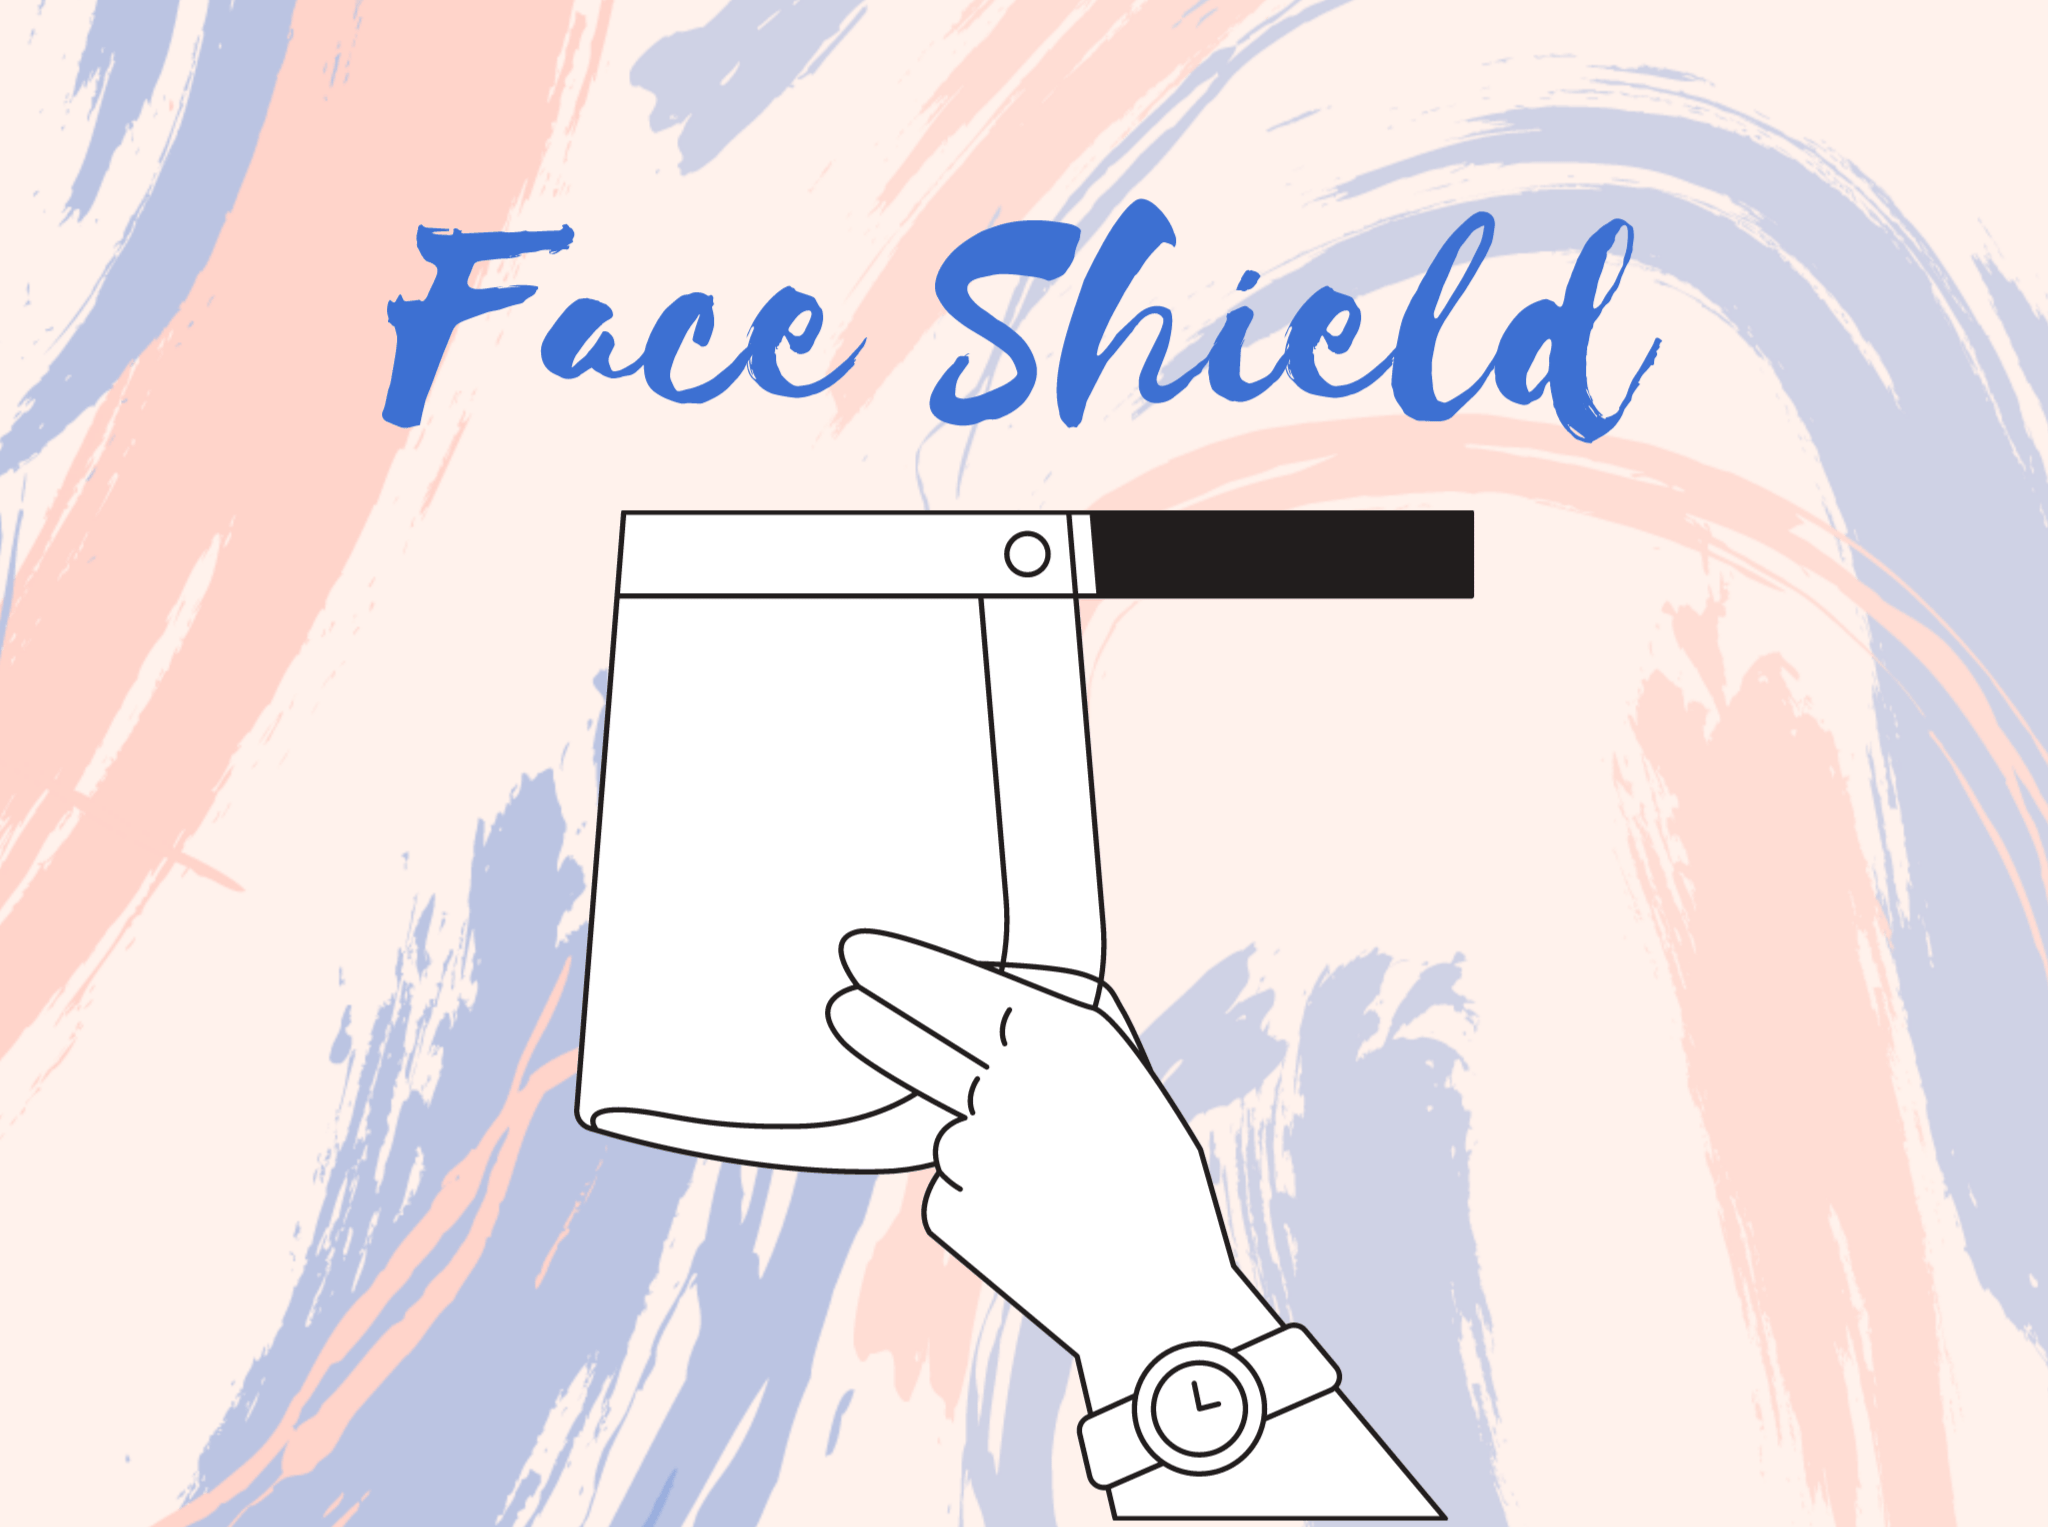 face shield (sumber gambar: dokumentasi pribadi)